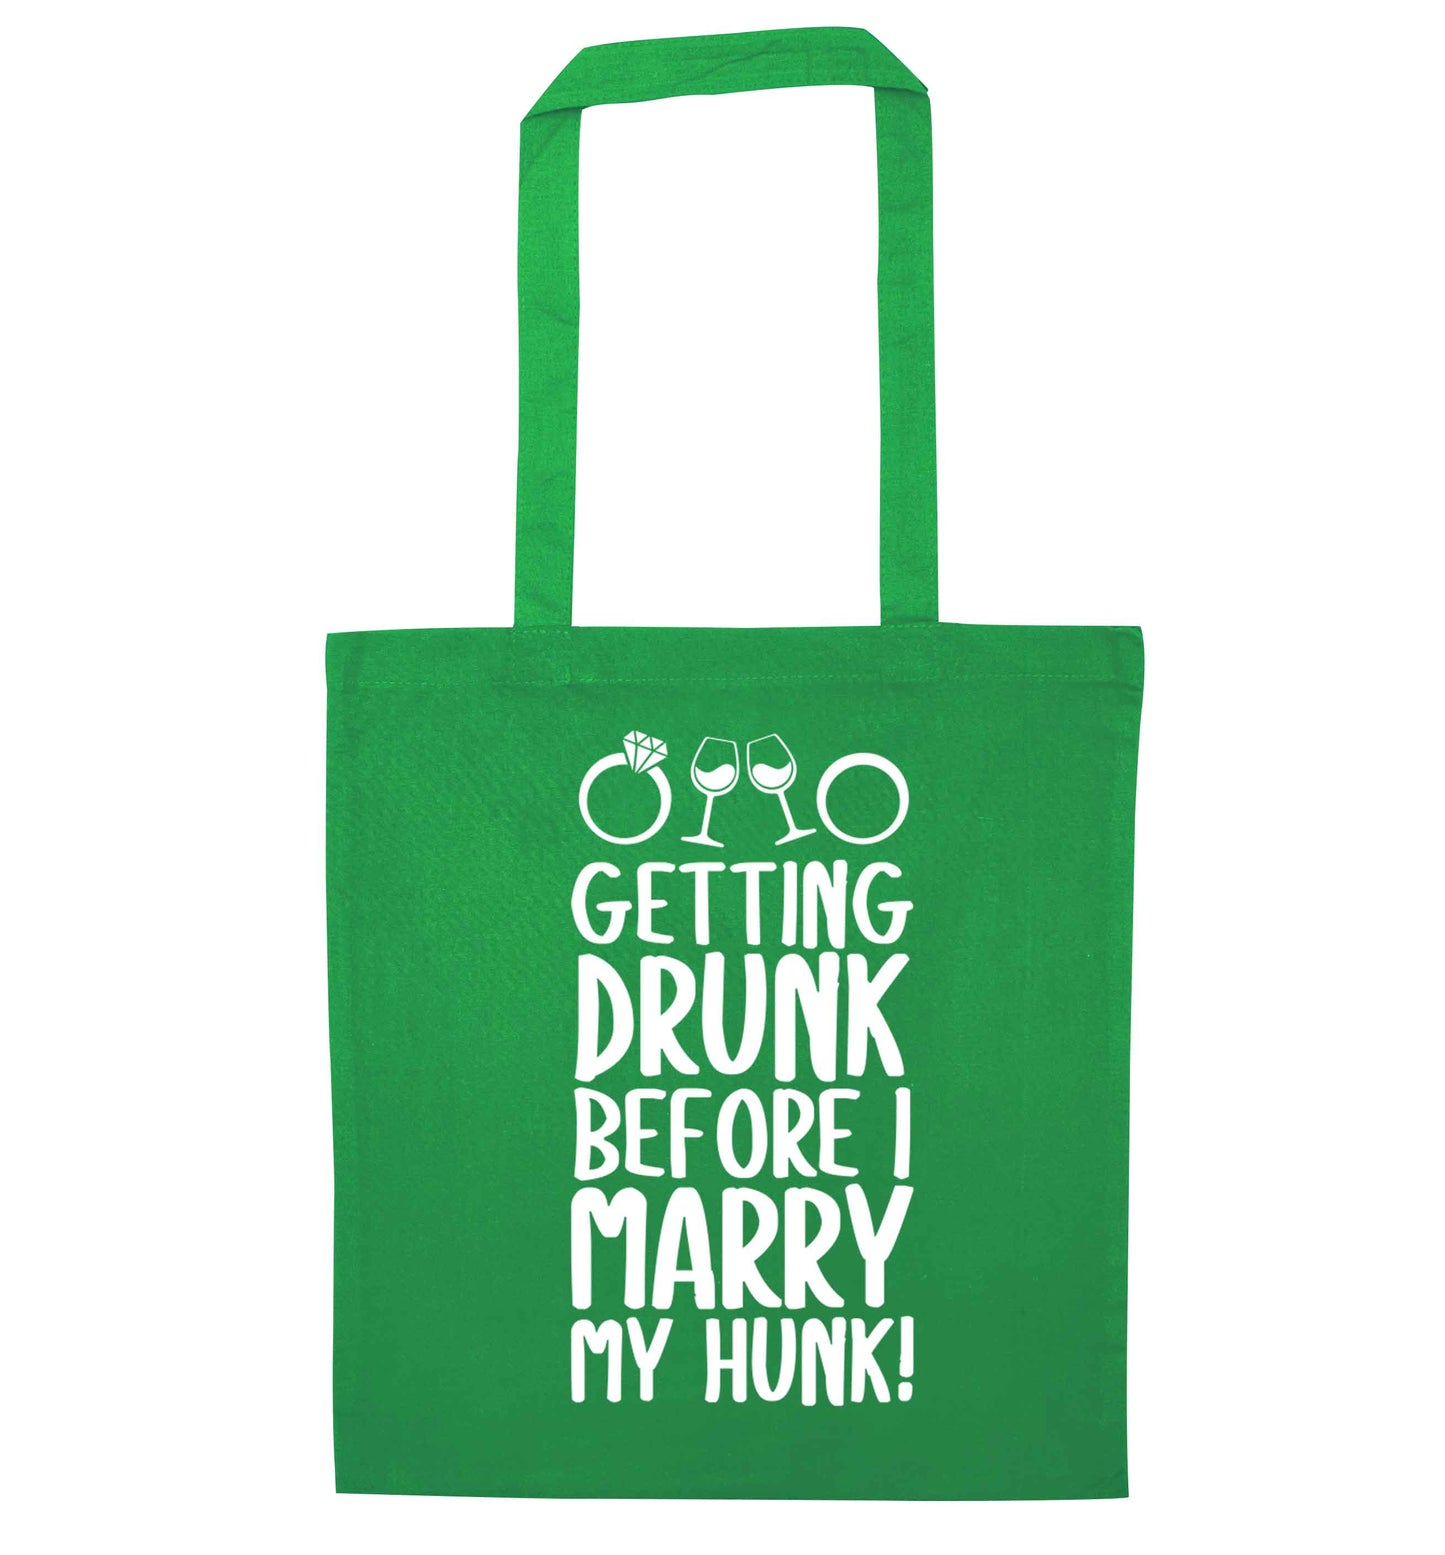 Getting drunk before I marry my hunk green tote bag